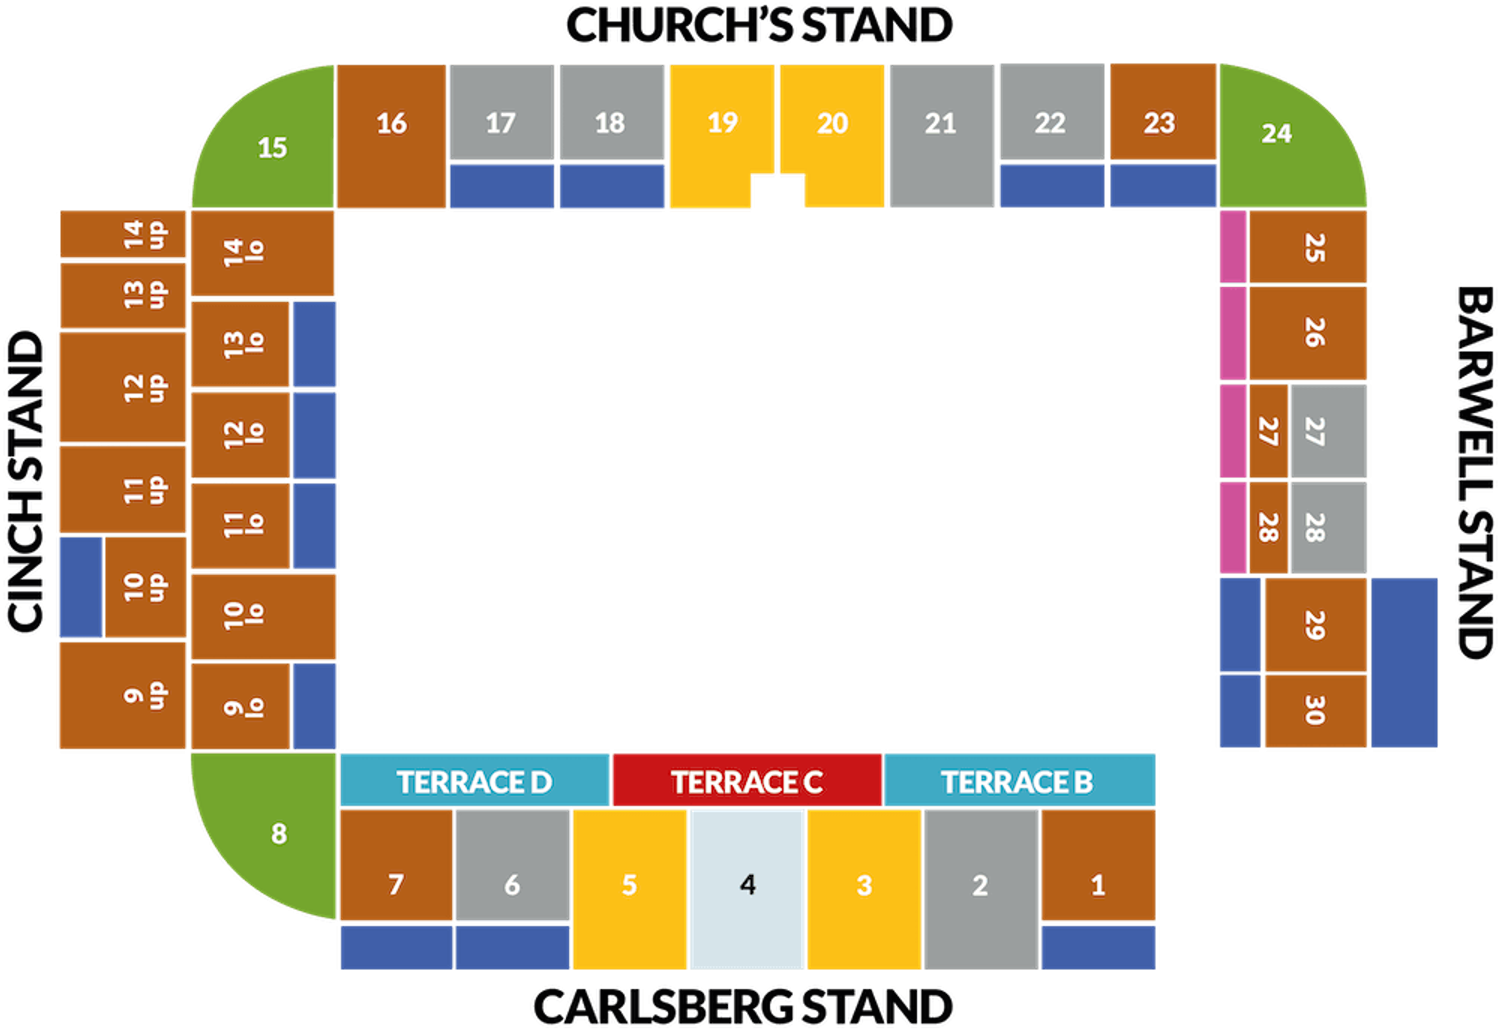 Ticketing map of cinch Stadium at Franklin’s Gardens